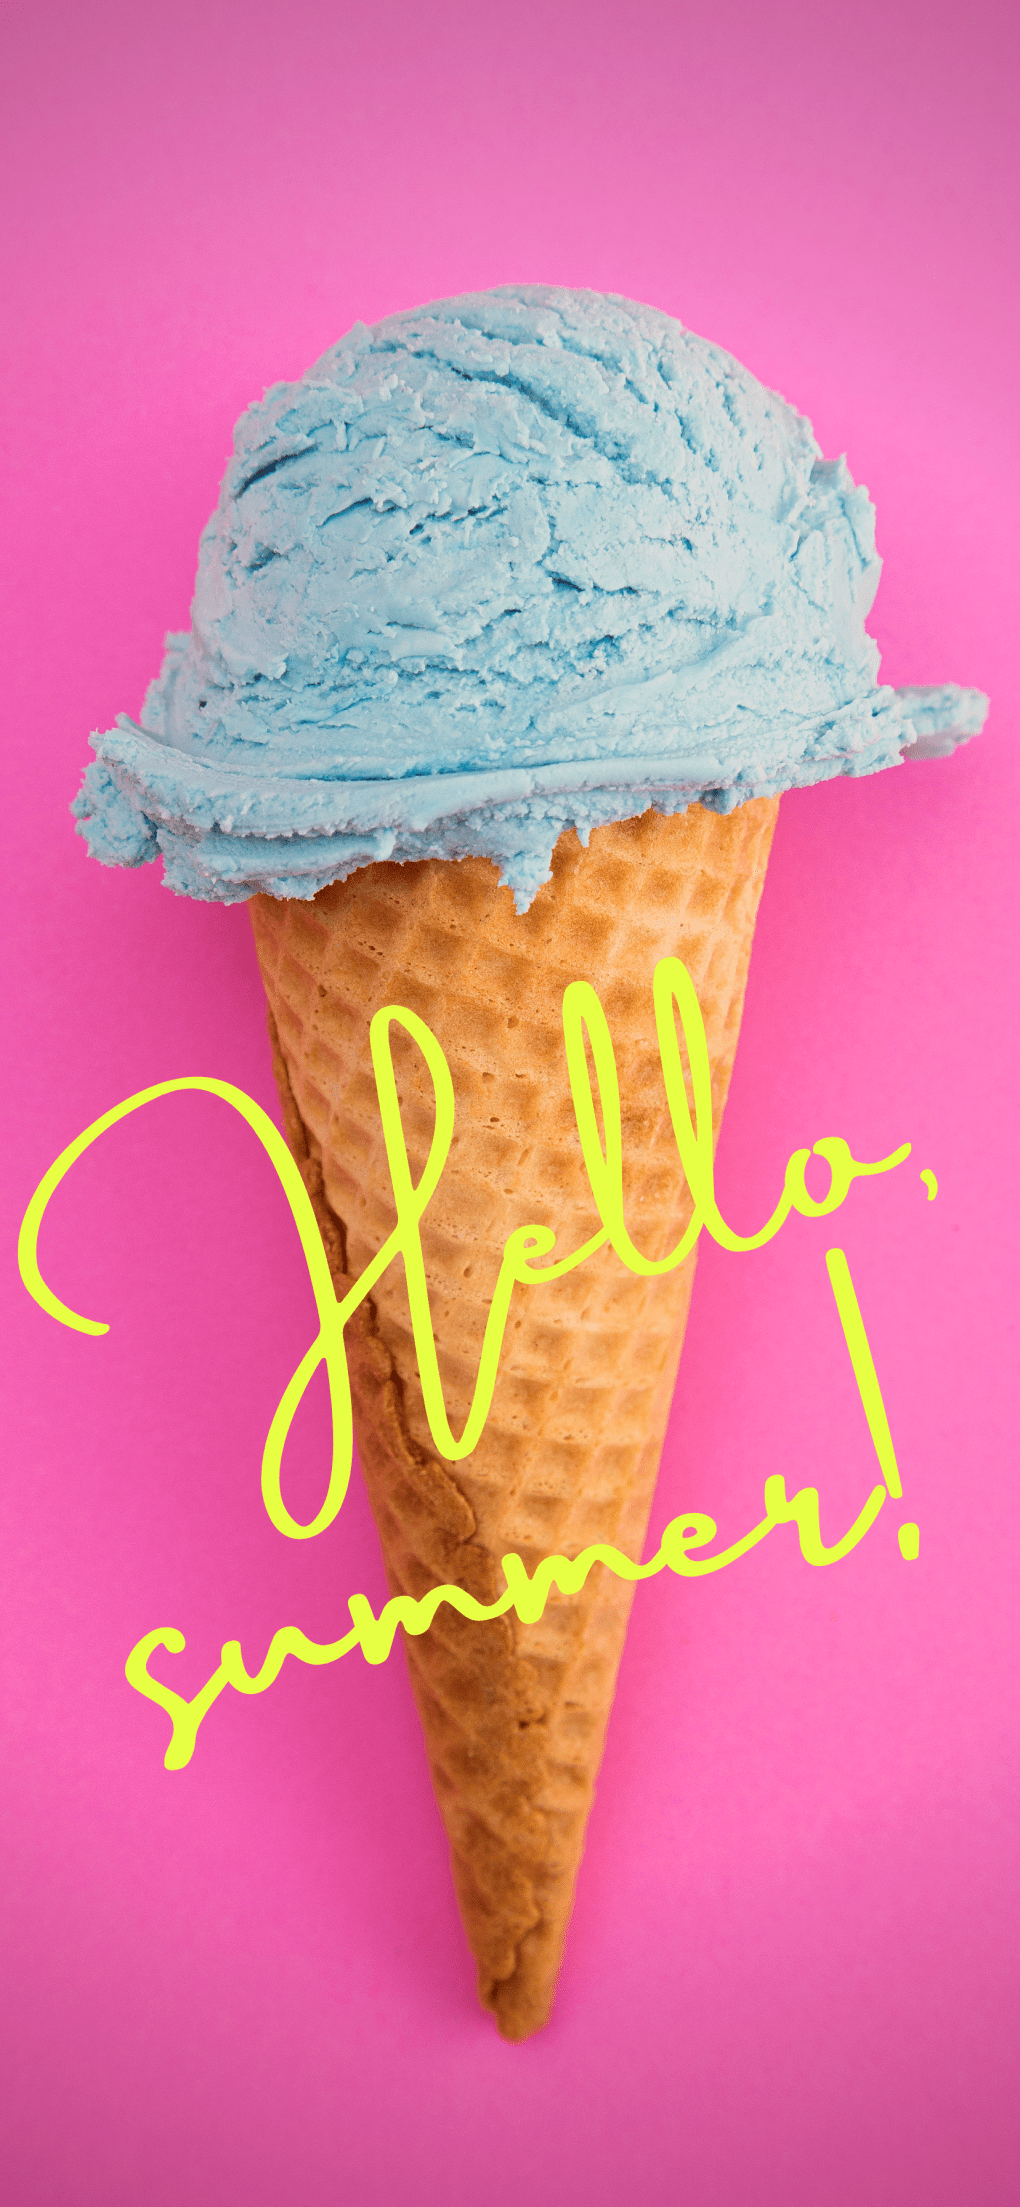 Hello, summer!” Ice Cream Cone. Summer Phone Lock Screen Wallpaper. AshleyEddleman.com. Freebies. Summer wallpaper, Phone wallpaper, Wallpaper